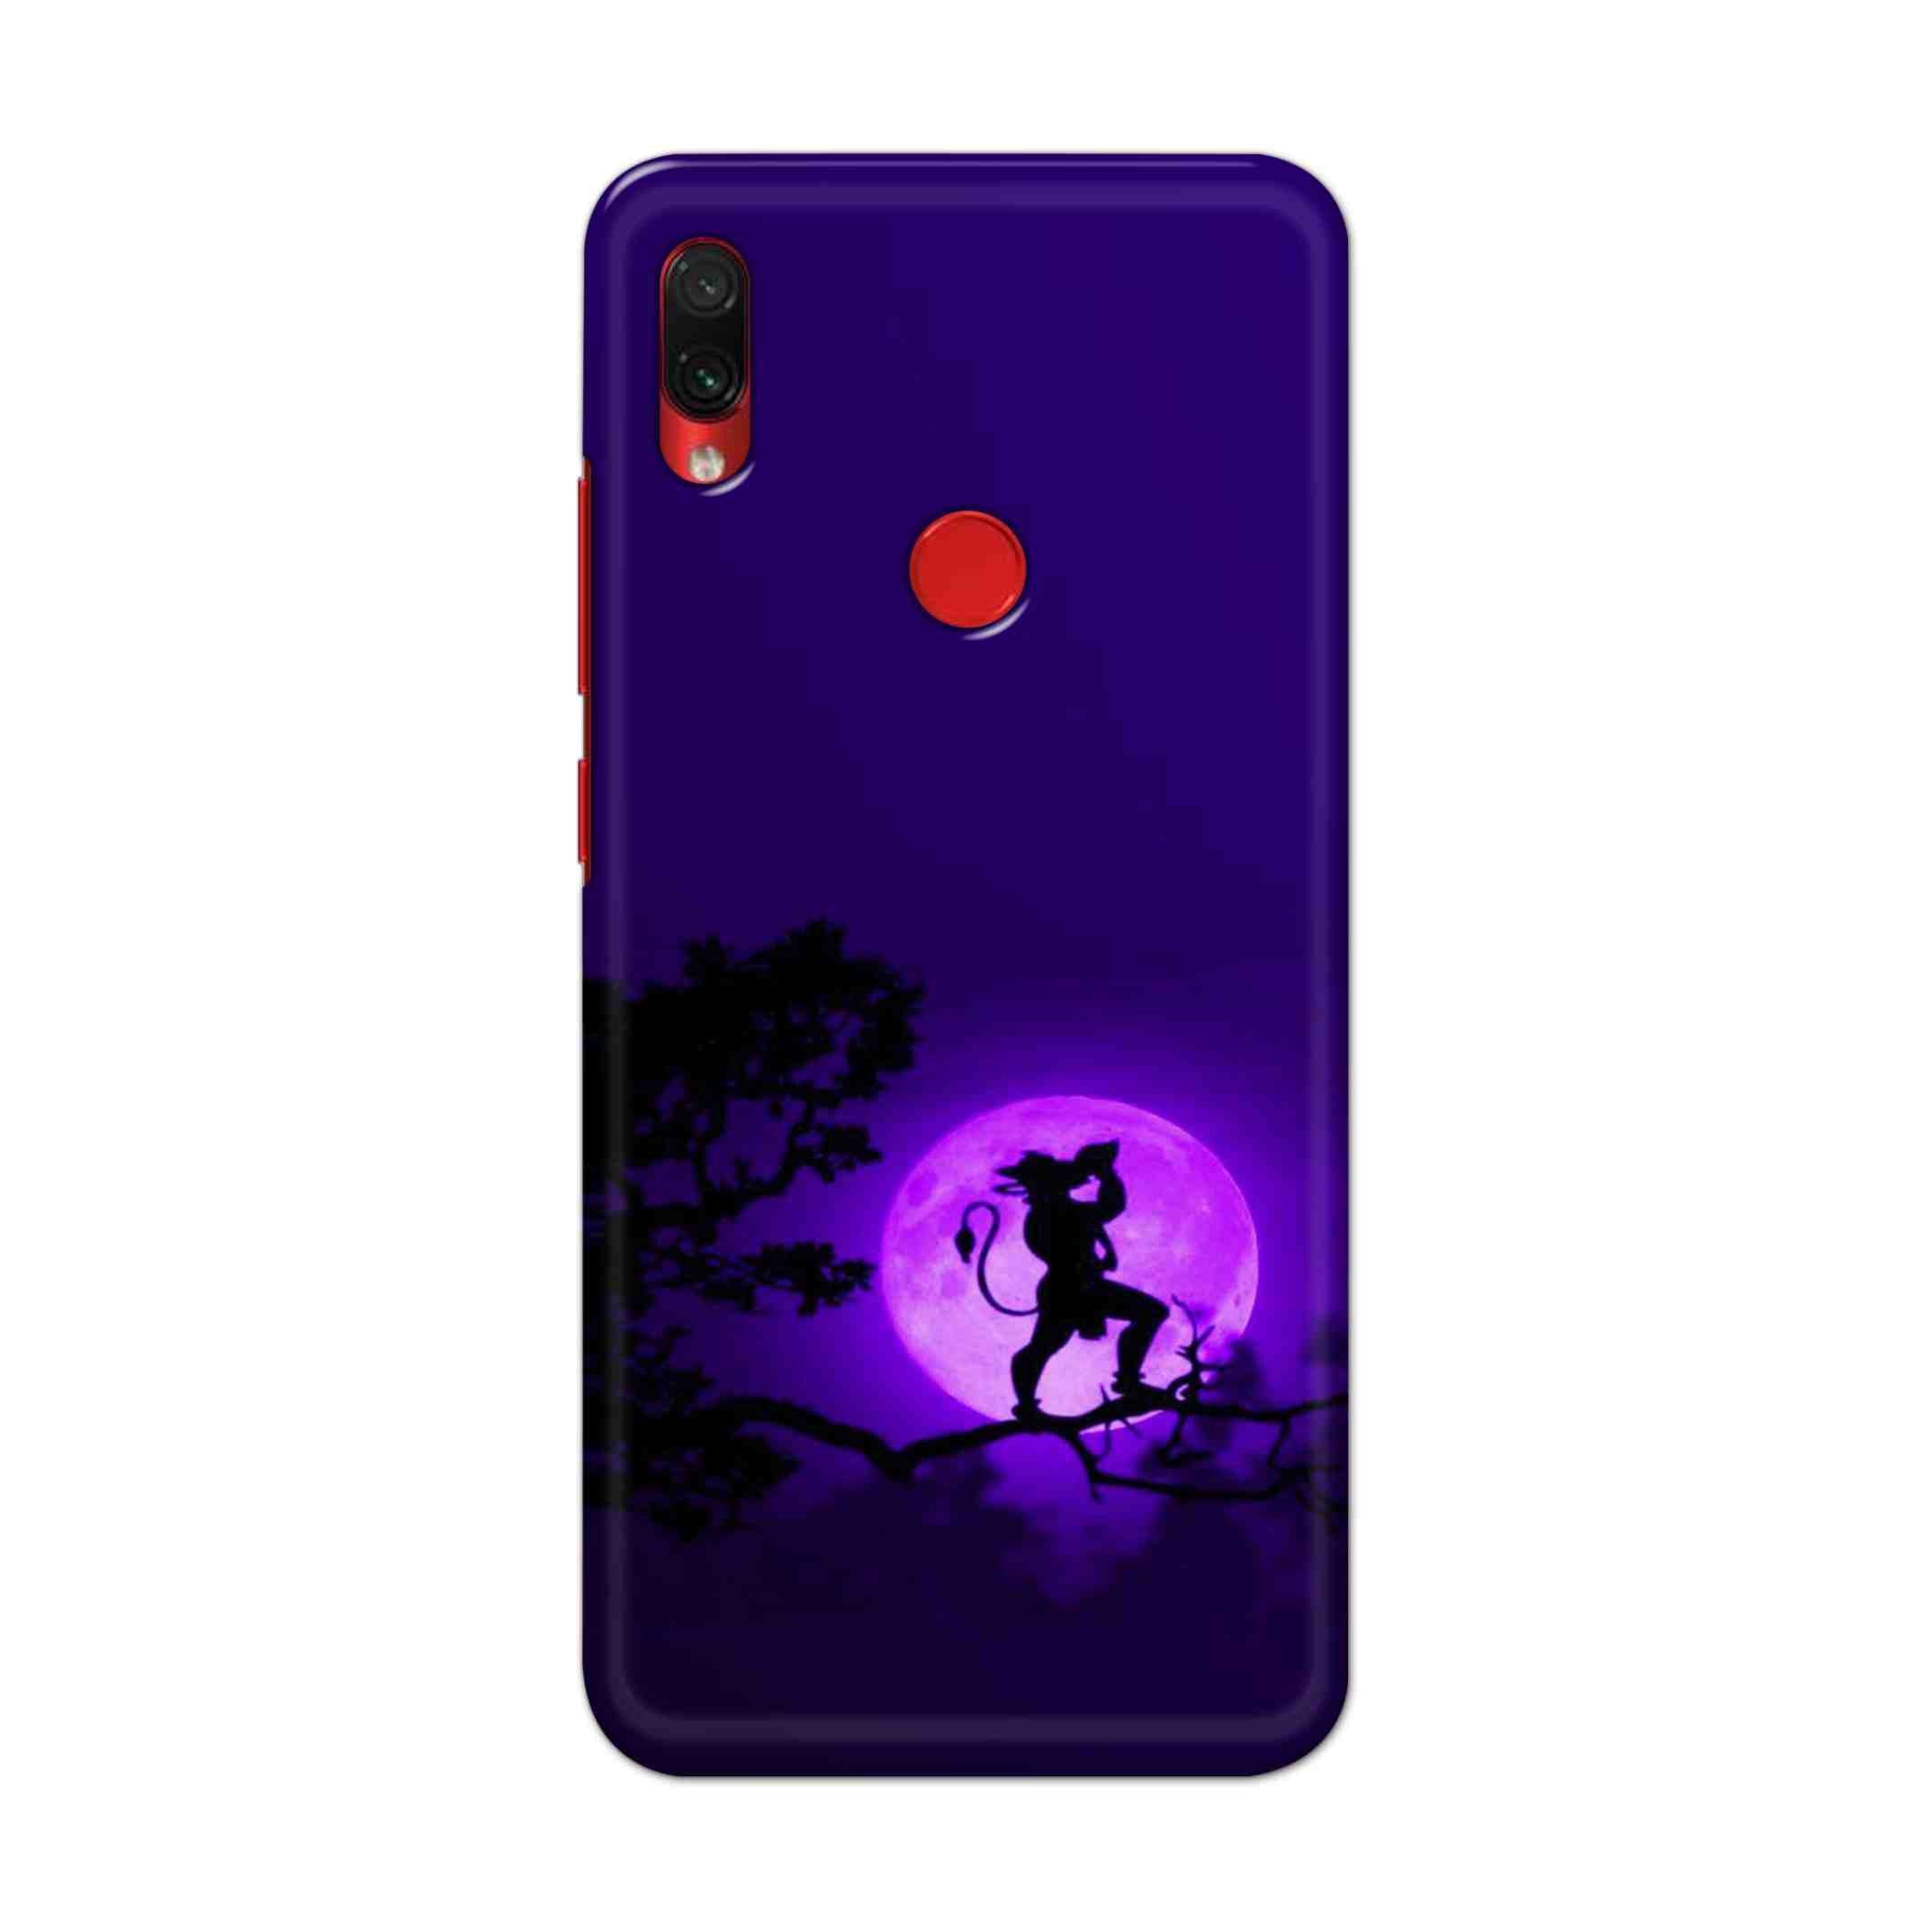 Buy Hanuman Hard Back Mobile Phone Case Cover For Xiaomi Redmi Note 7S Online